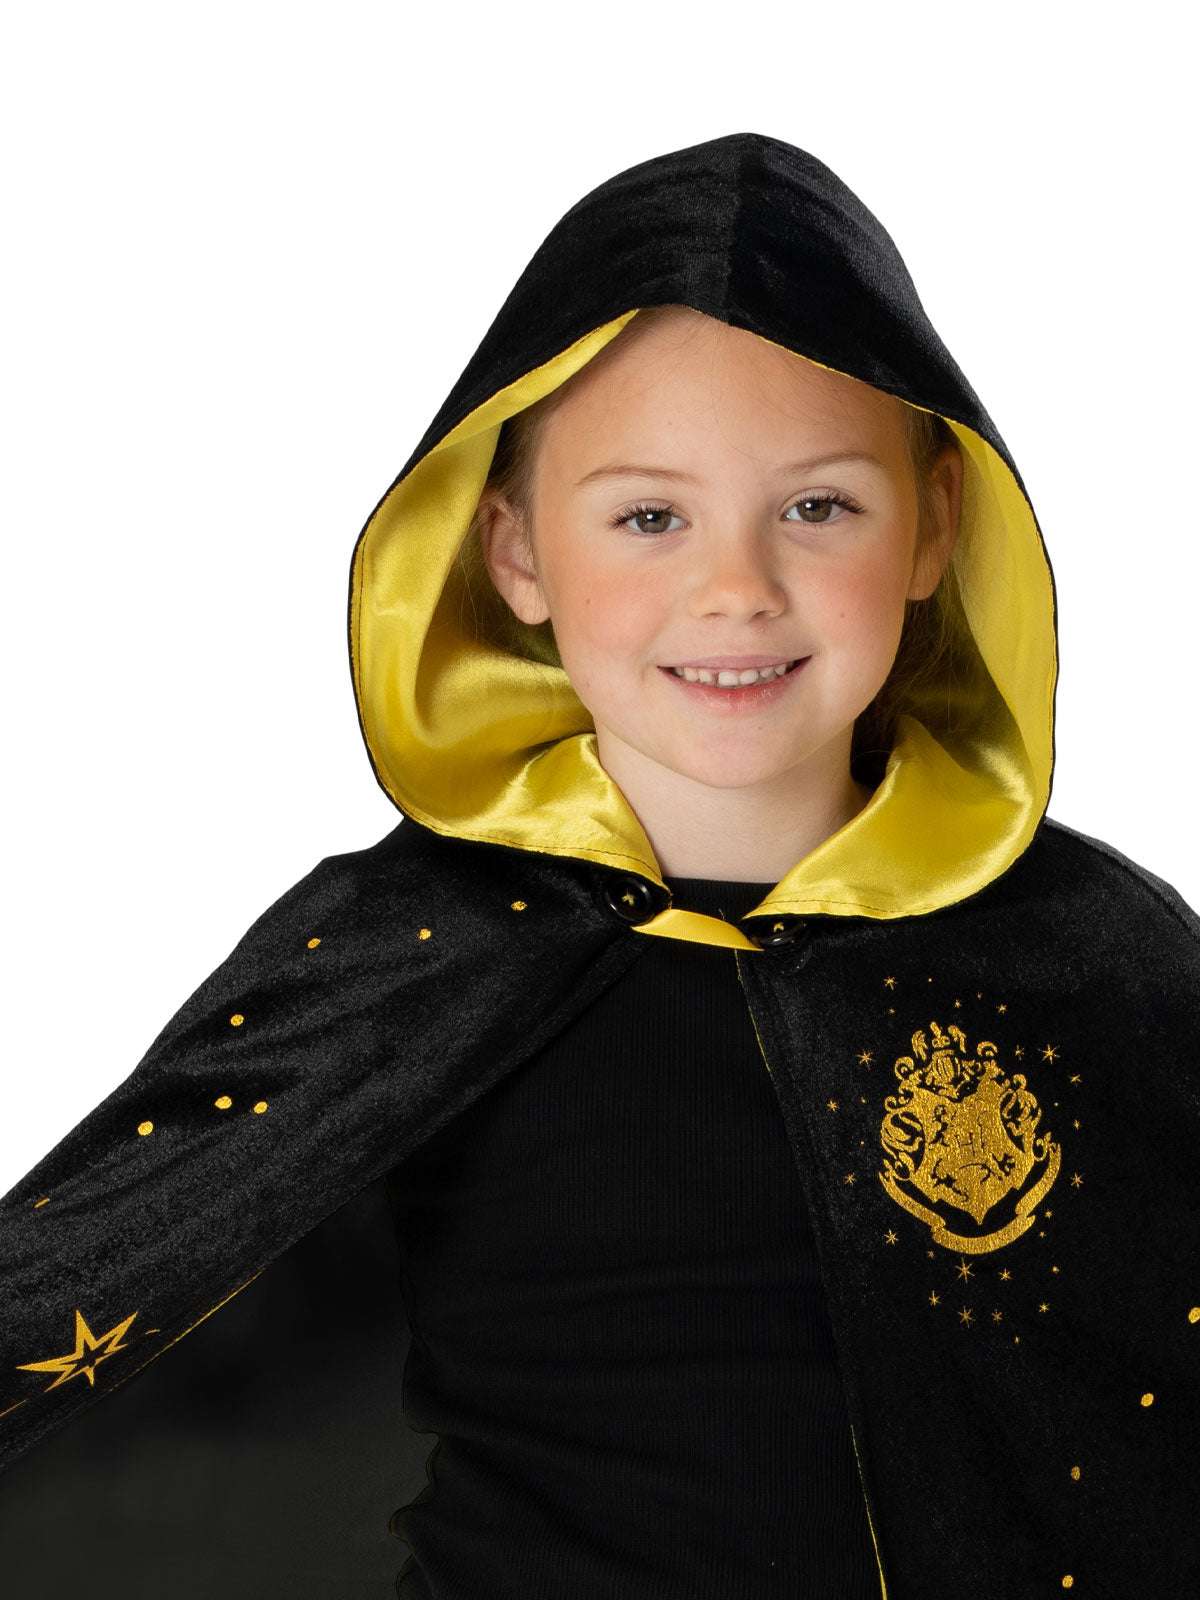 Hogwarts Child Black & Gold Hooded Robe Harry Potter Licensed